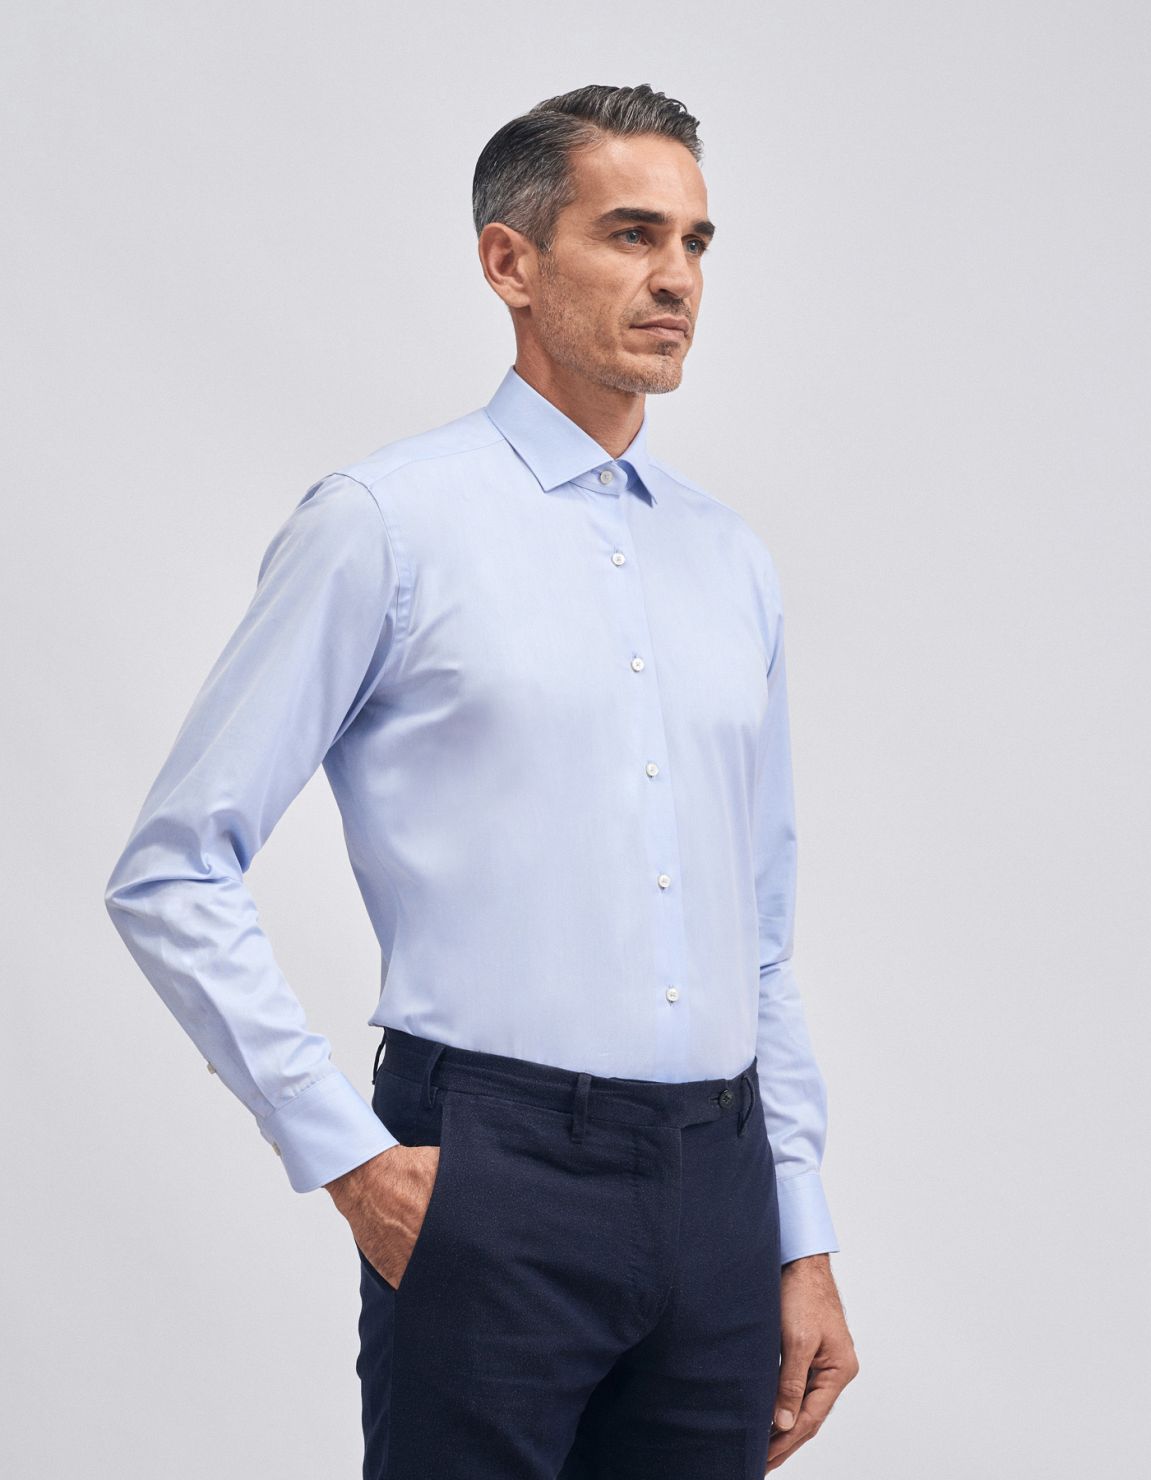 Shirt Collar small cutaway Light Blue Twill Tailor Custom Fit 1